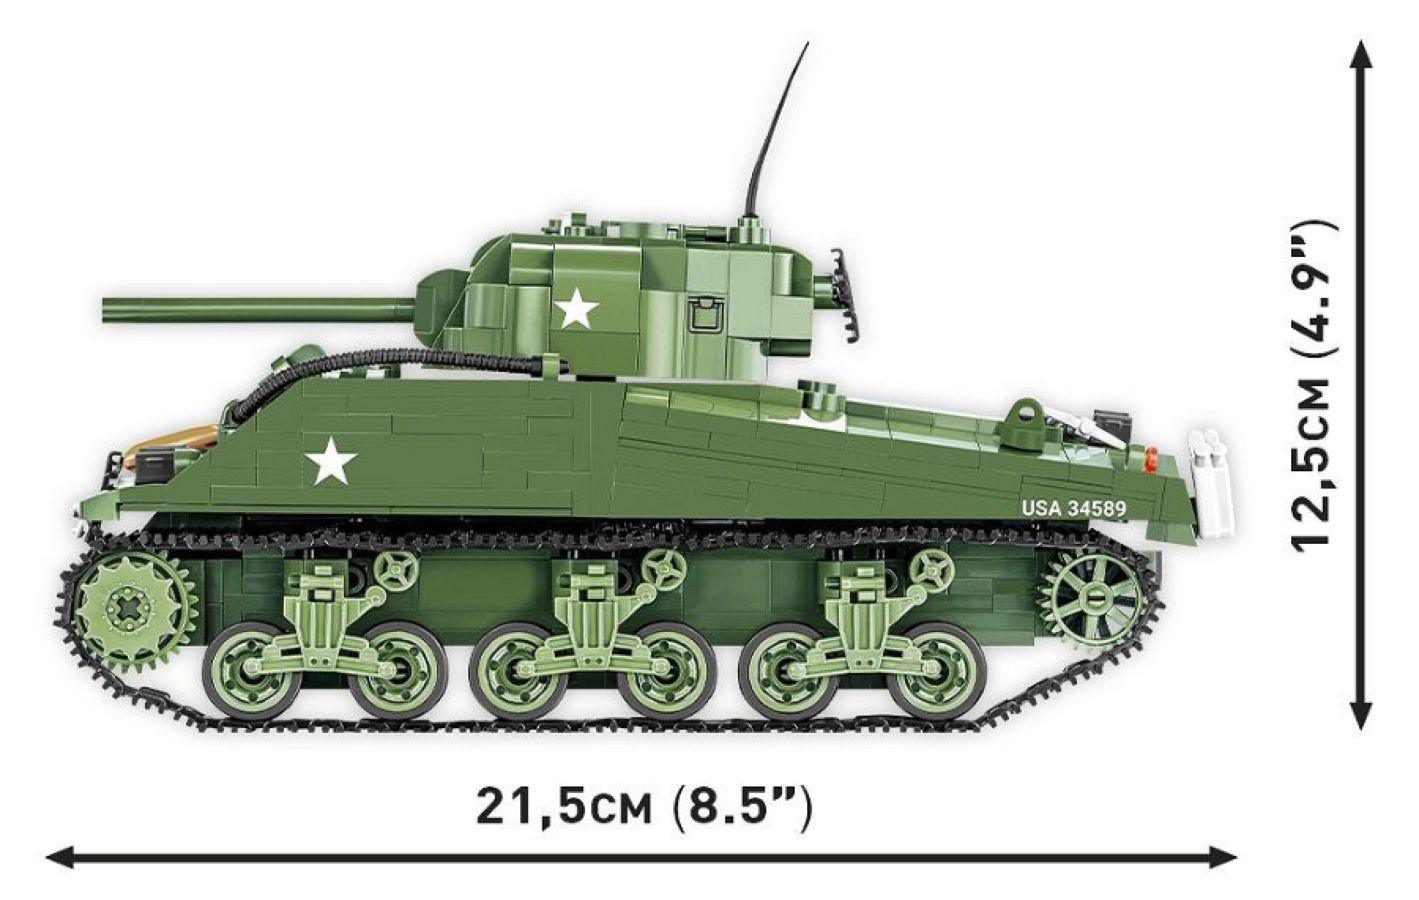 COB2570 World War 2 - M4A3 Sherman (852 Piece Kit) - Cobi - Titan Pop Culture